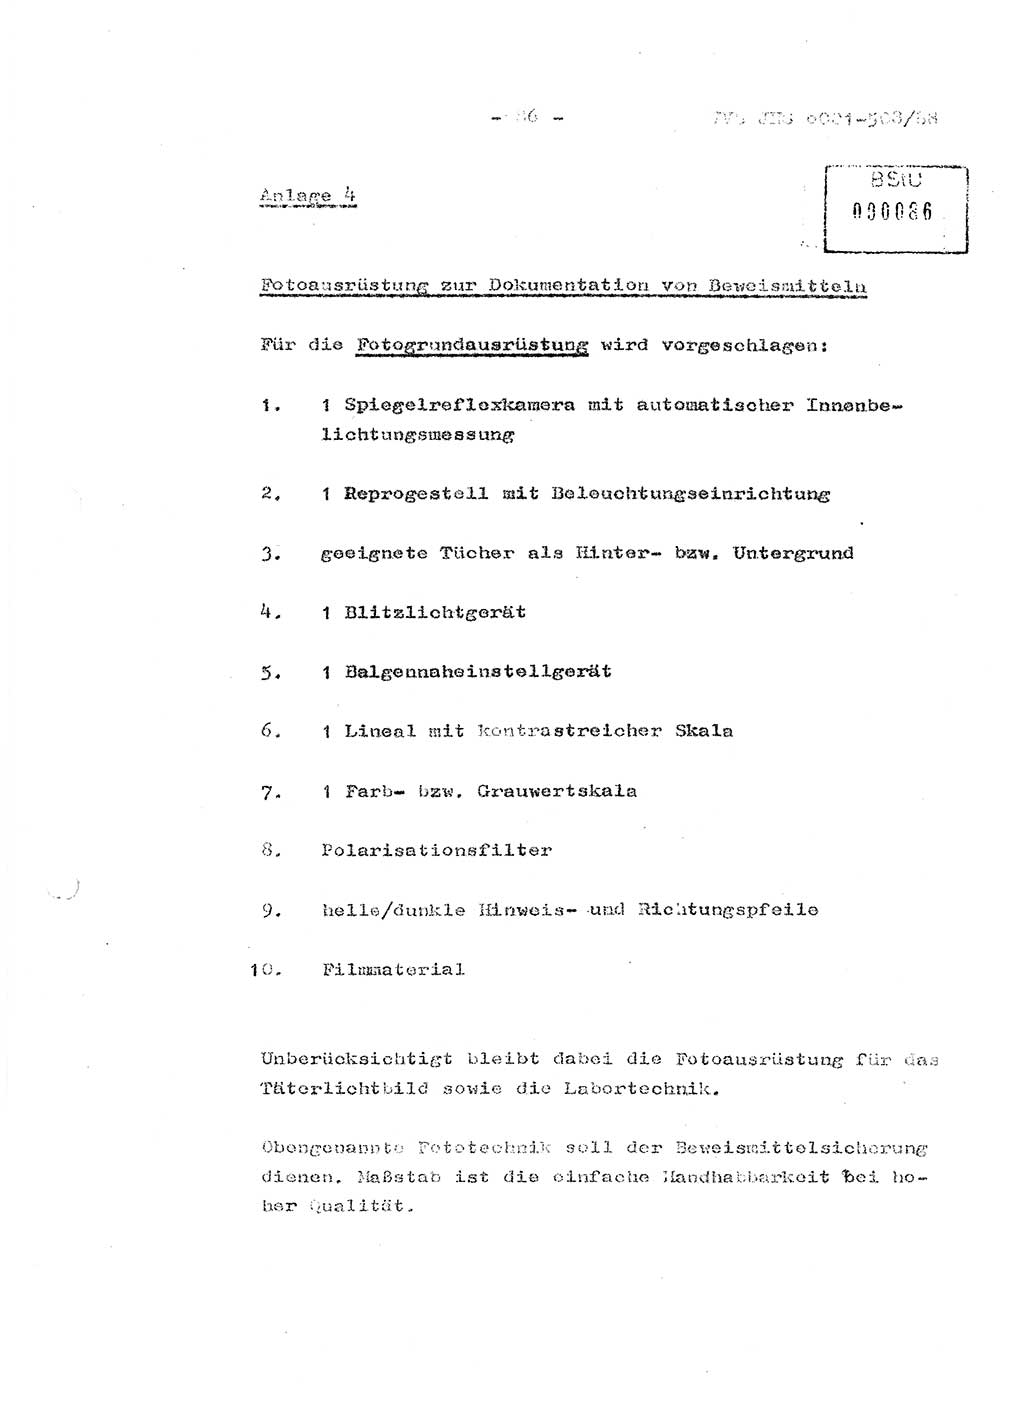 Diplomarbeit Hauptmann Christian Kätzel (Abt. ⅩⅣ), Ministerium für Staatssicherheit (MfS) [Deutsche Demokratische Republik (DDR)], Juristische Hochschule (JHS), Vertrauliche Verschlußsache (VVS) o001-508/88, Potsdam 1988, Blatt 86 (Dipl.-Arb. MfS DDR JHS VVS o001-508/88 1988, Bl. 86)